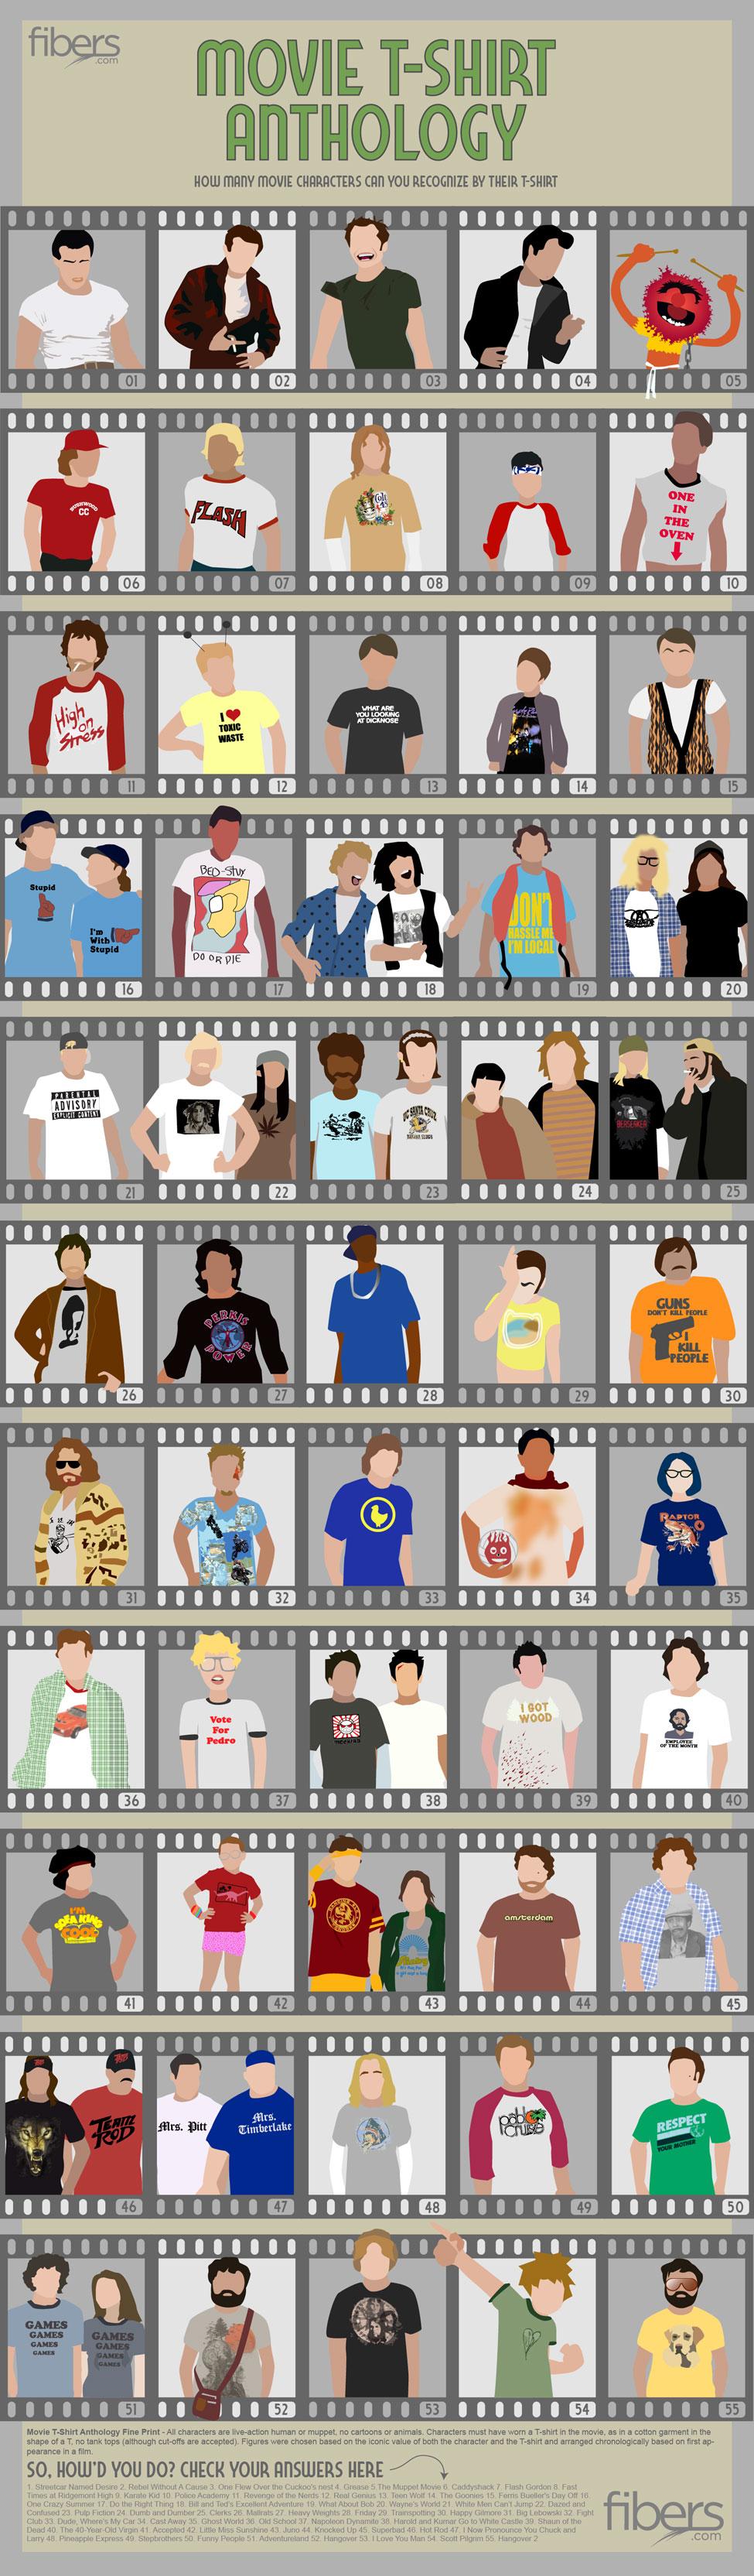 Les 55 t-shirts qui ont marqués l’histoire du cinéma